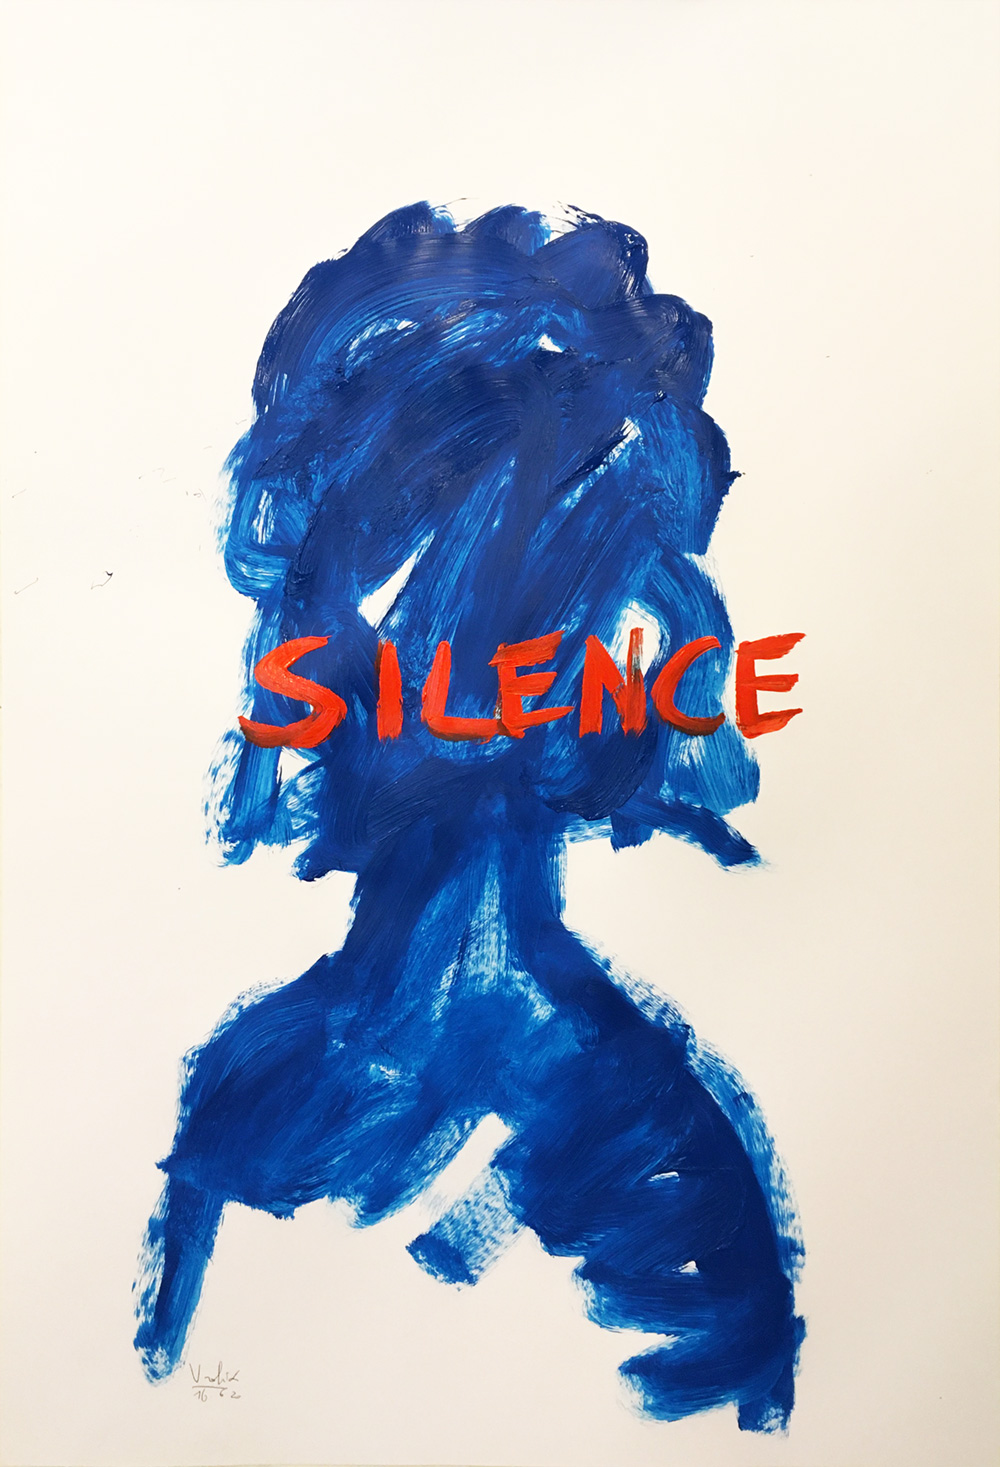 Silence, by Guido Vrolix